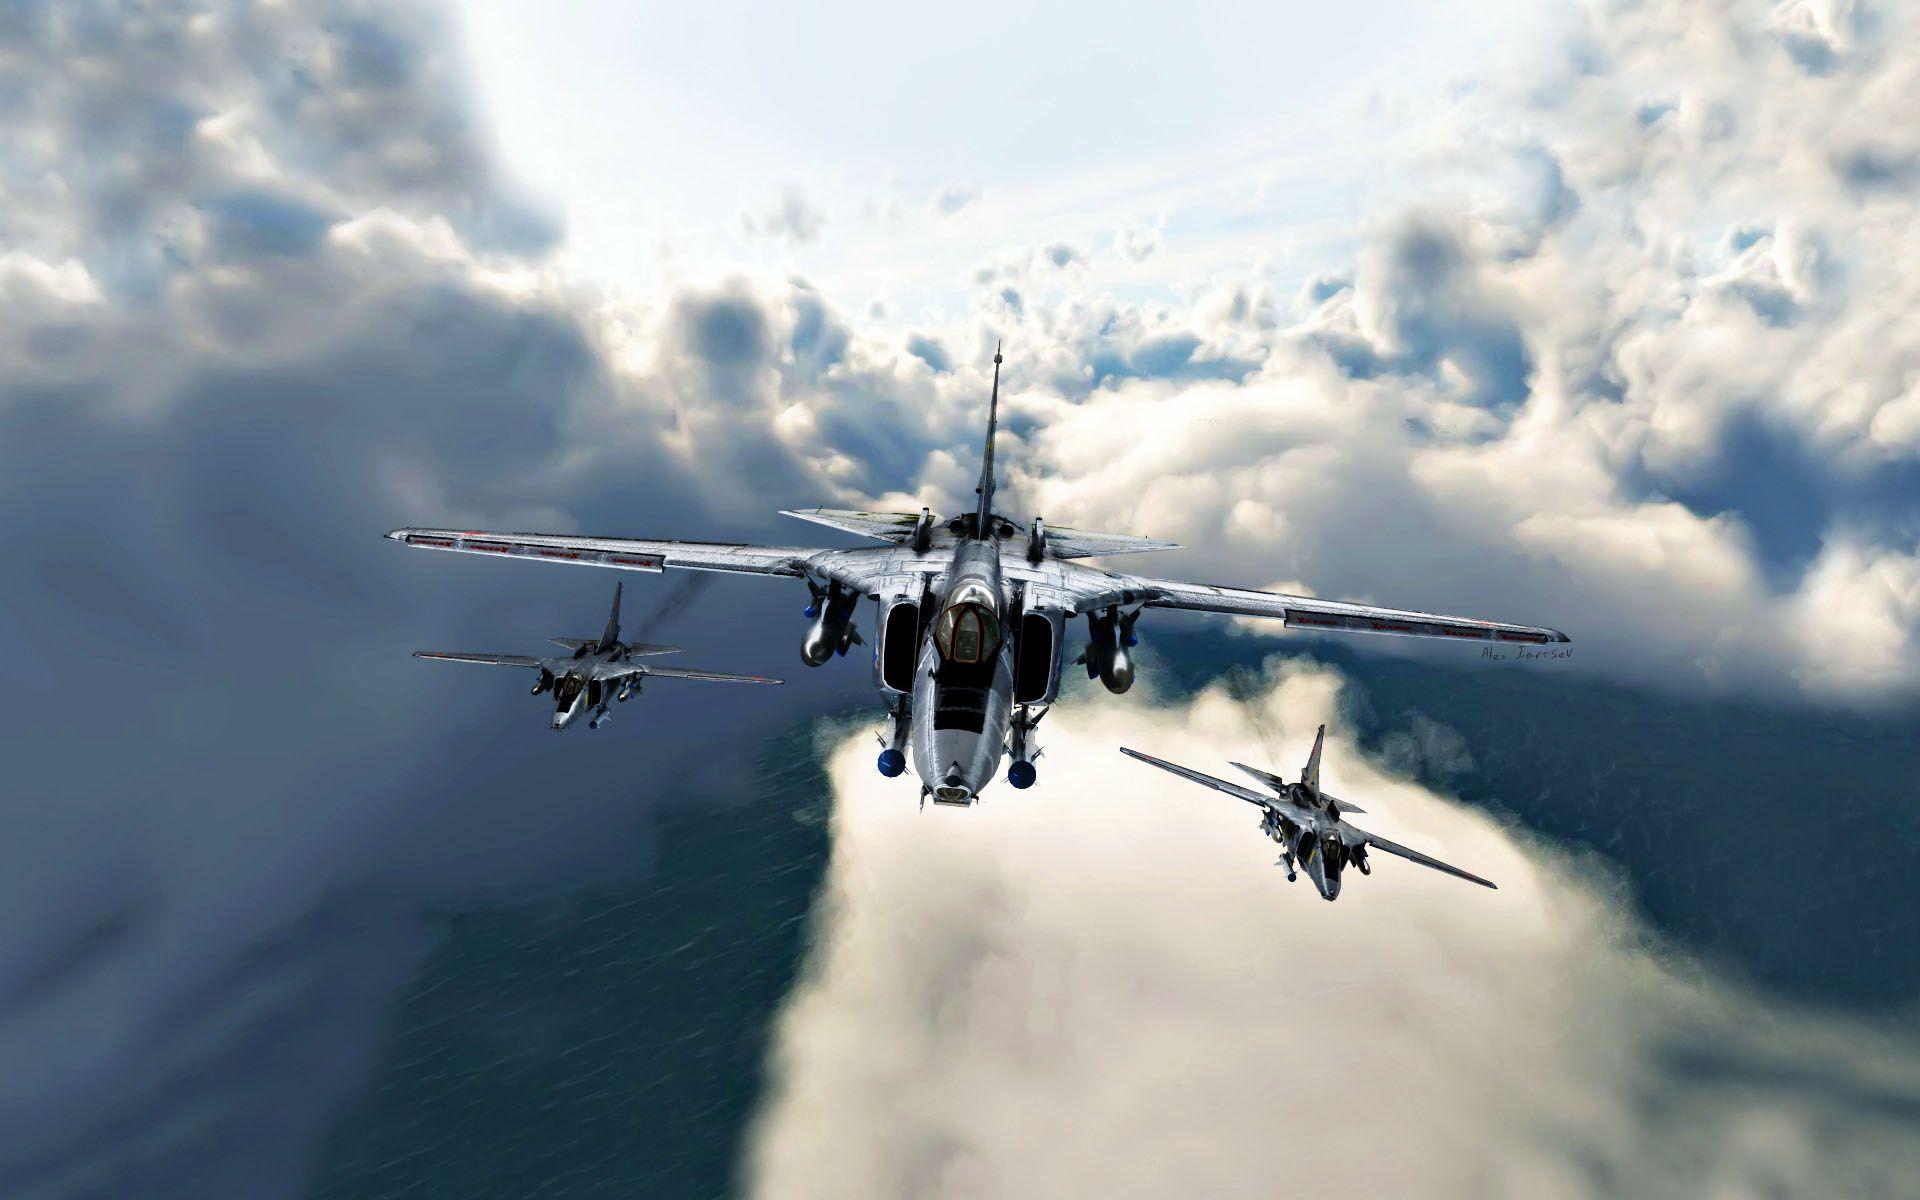 Fighter Jet Desktop Wallpaper